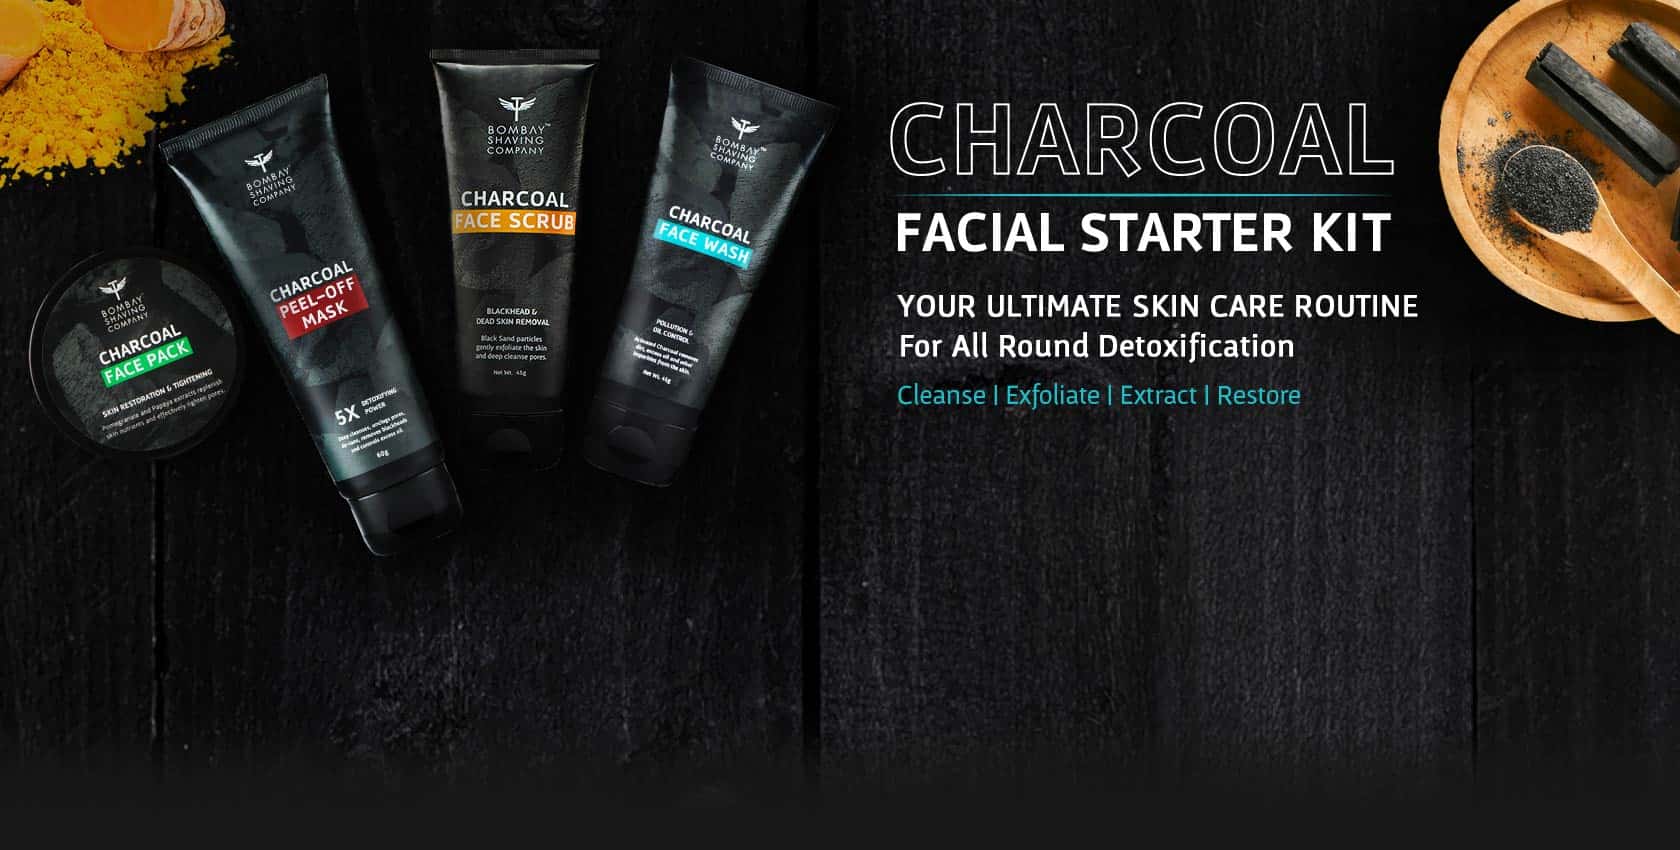 Bombay Shaving Company Charcoal Face Scrub | Best Face Scrub for Men 